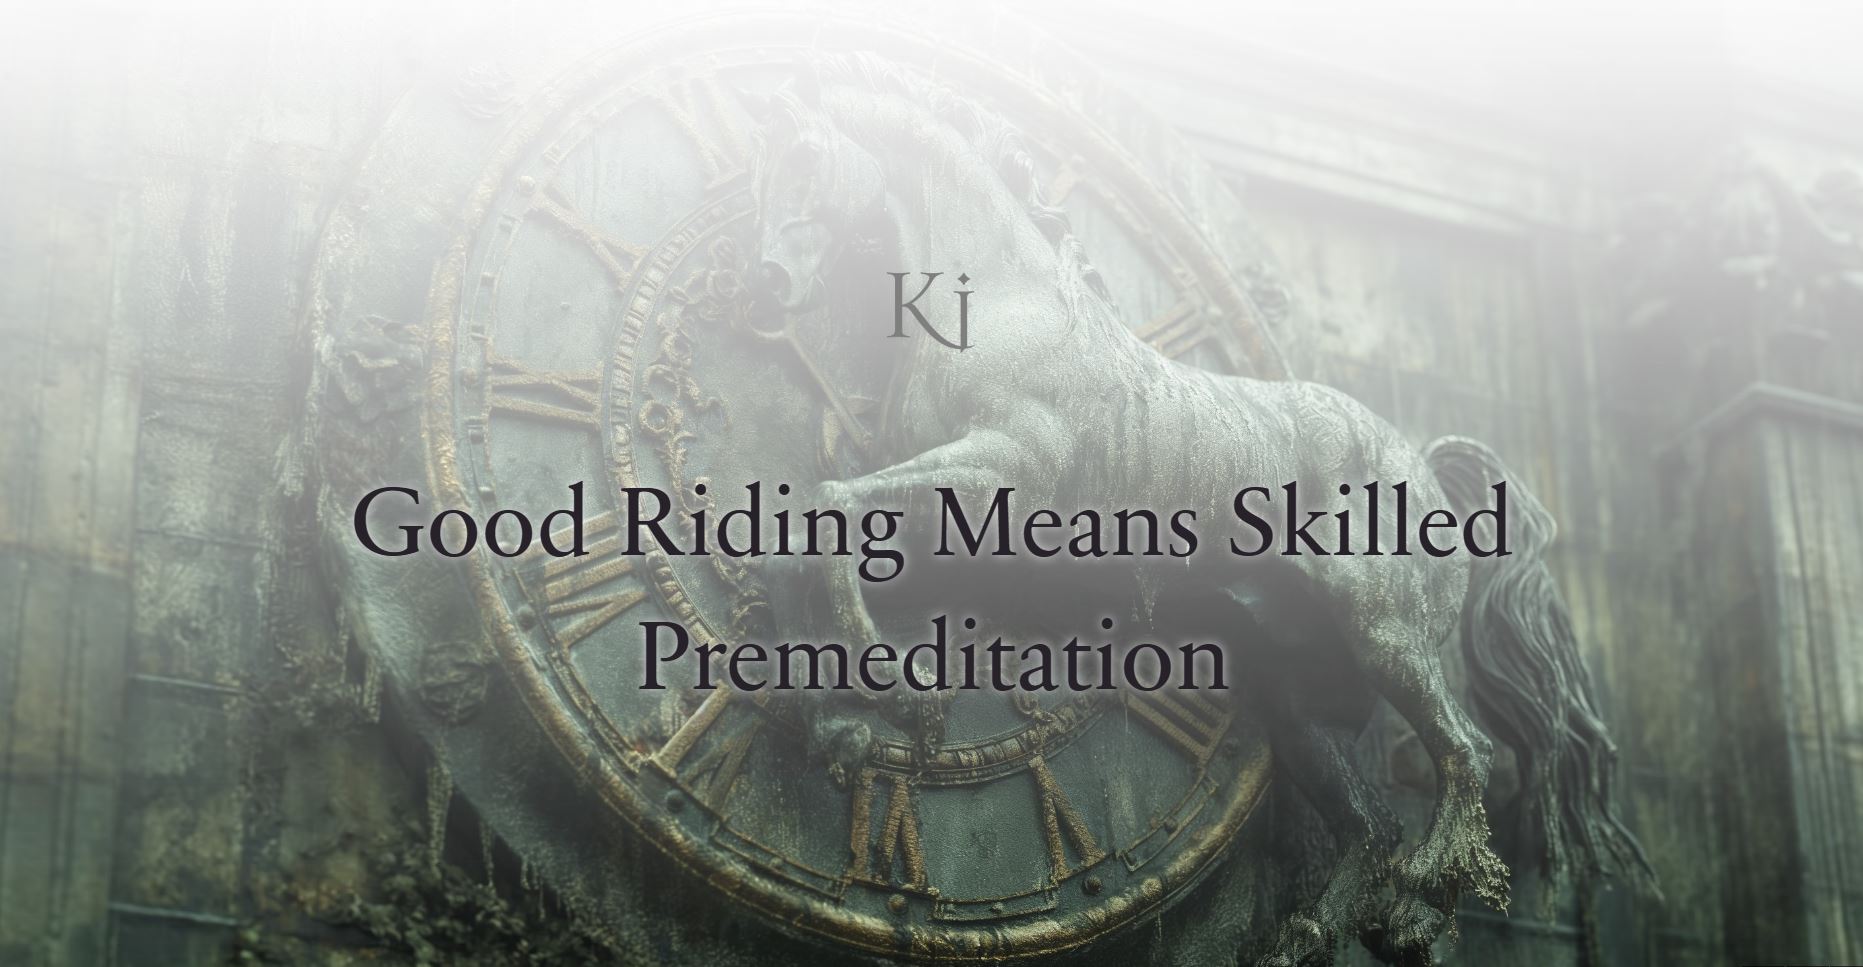 Premeditation and Riding